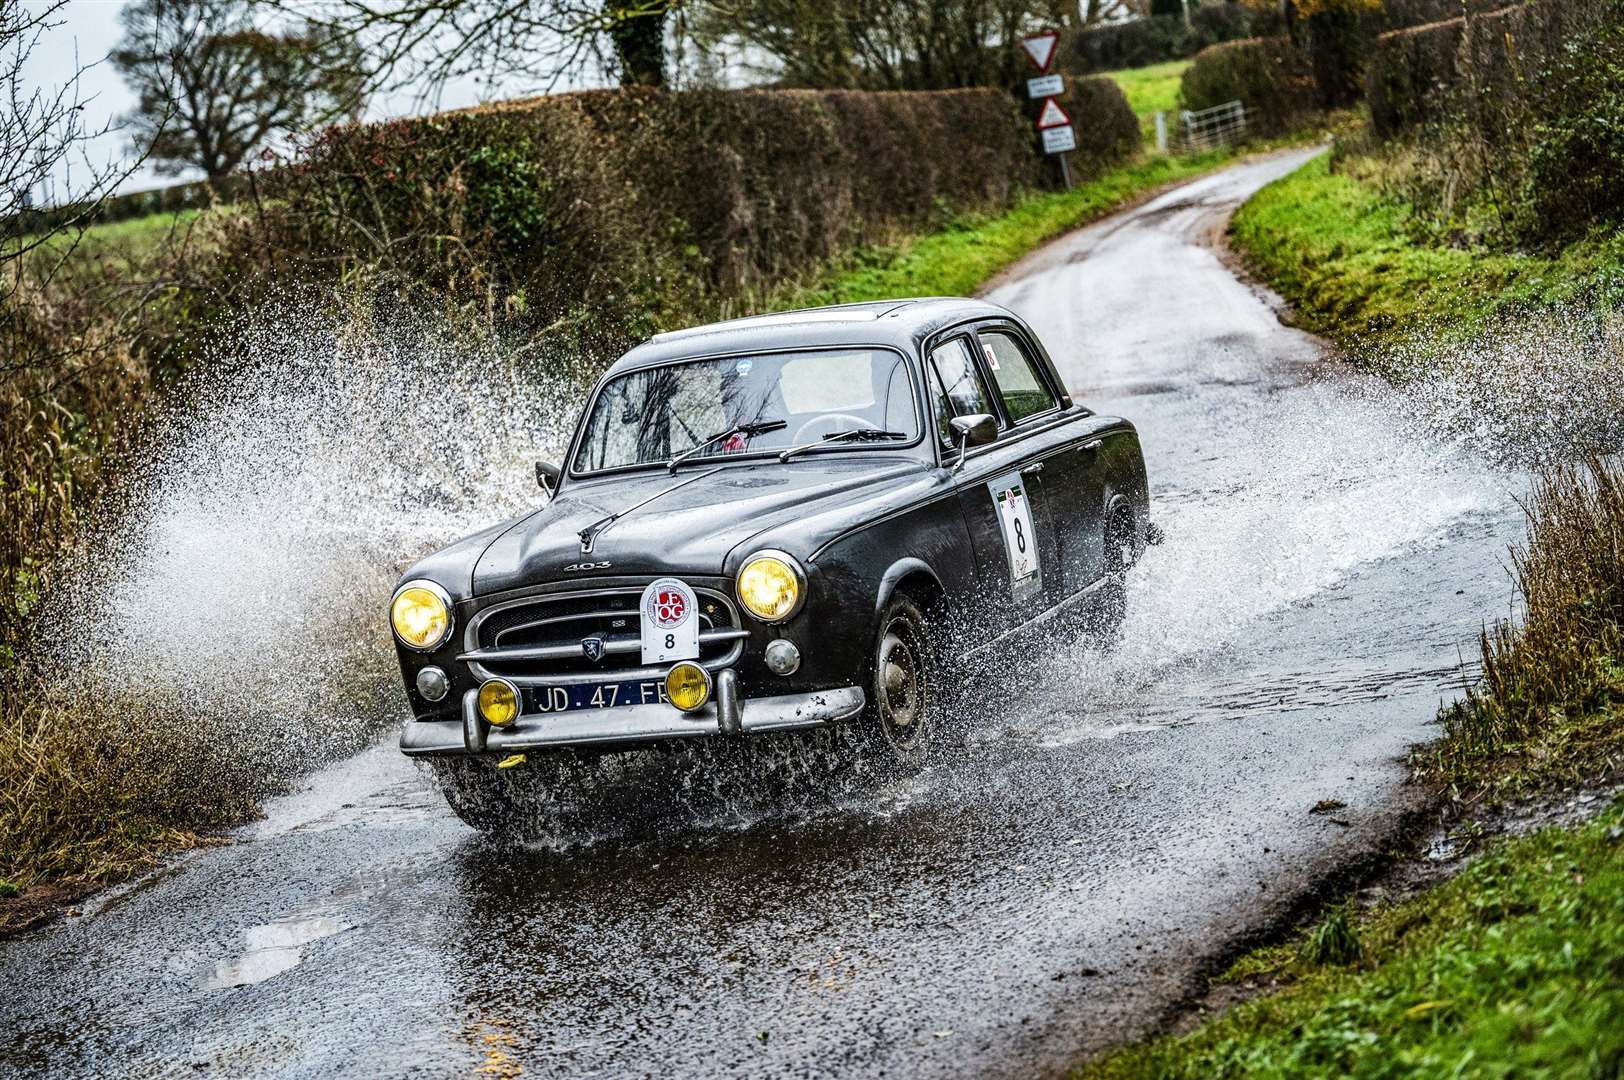 Making a splash through a ford. Picture: Francesco & Roberta Rastrelli/Blue passion Photo.